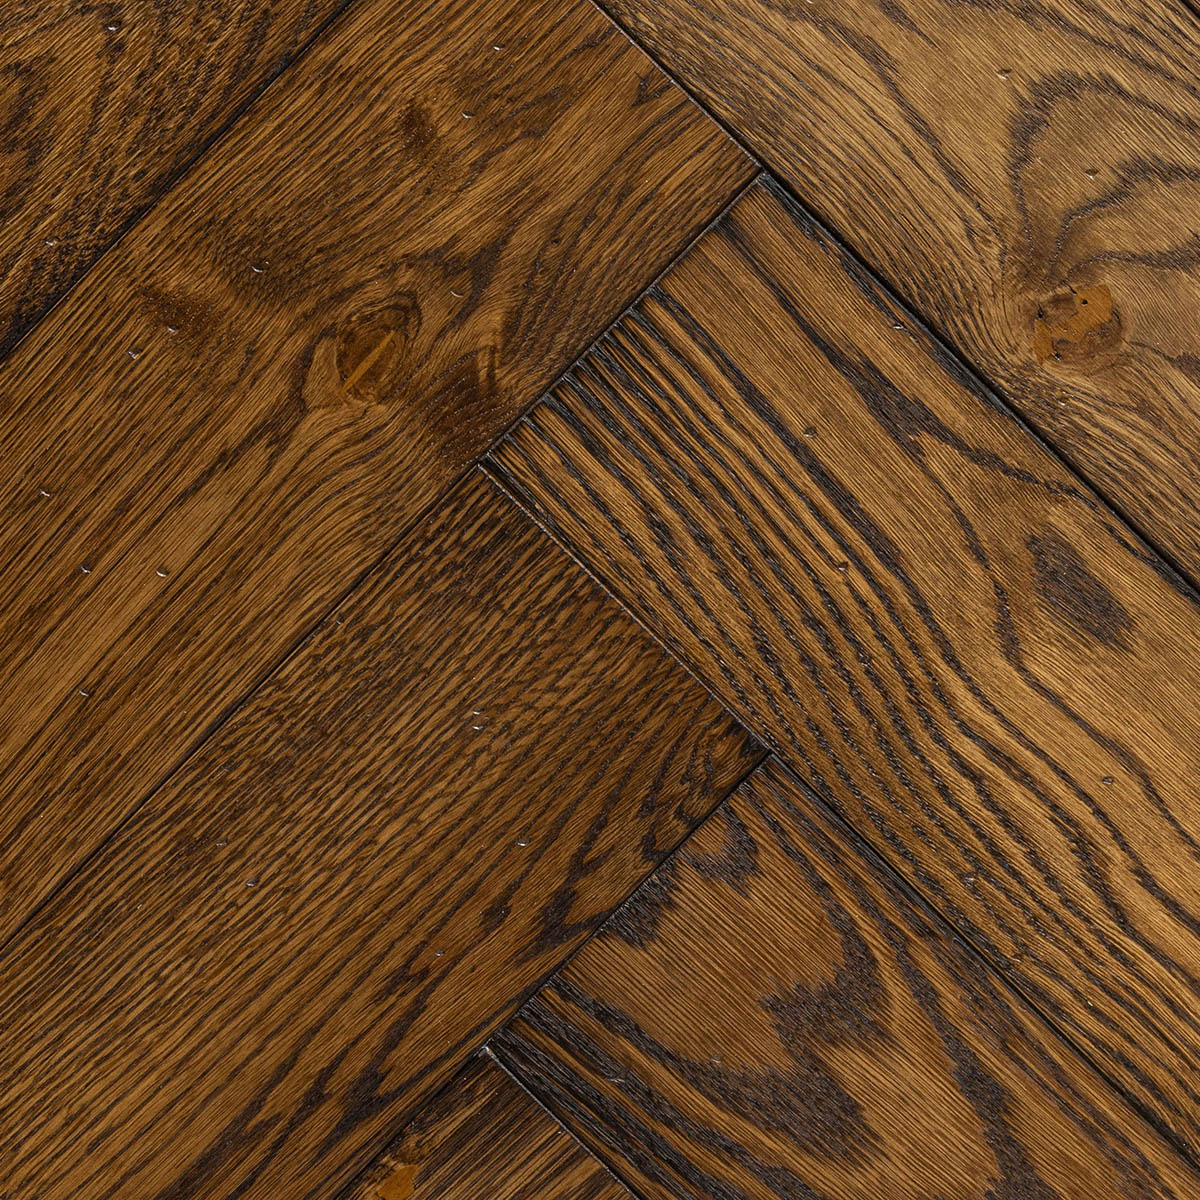 Highland Road Herringbone - Antique-Inspired Wood Floor